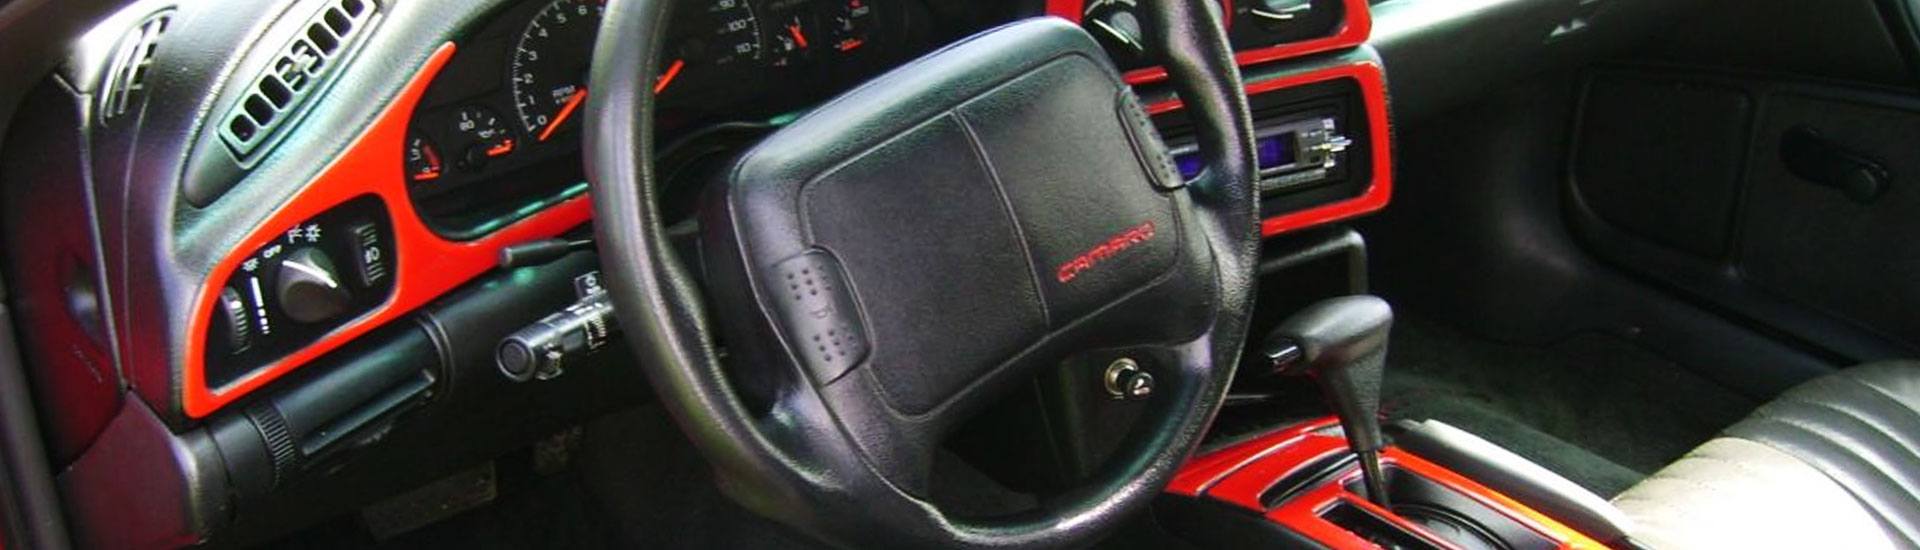 1996 Chevrolet Camaro Dash Kits